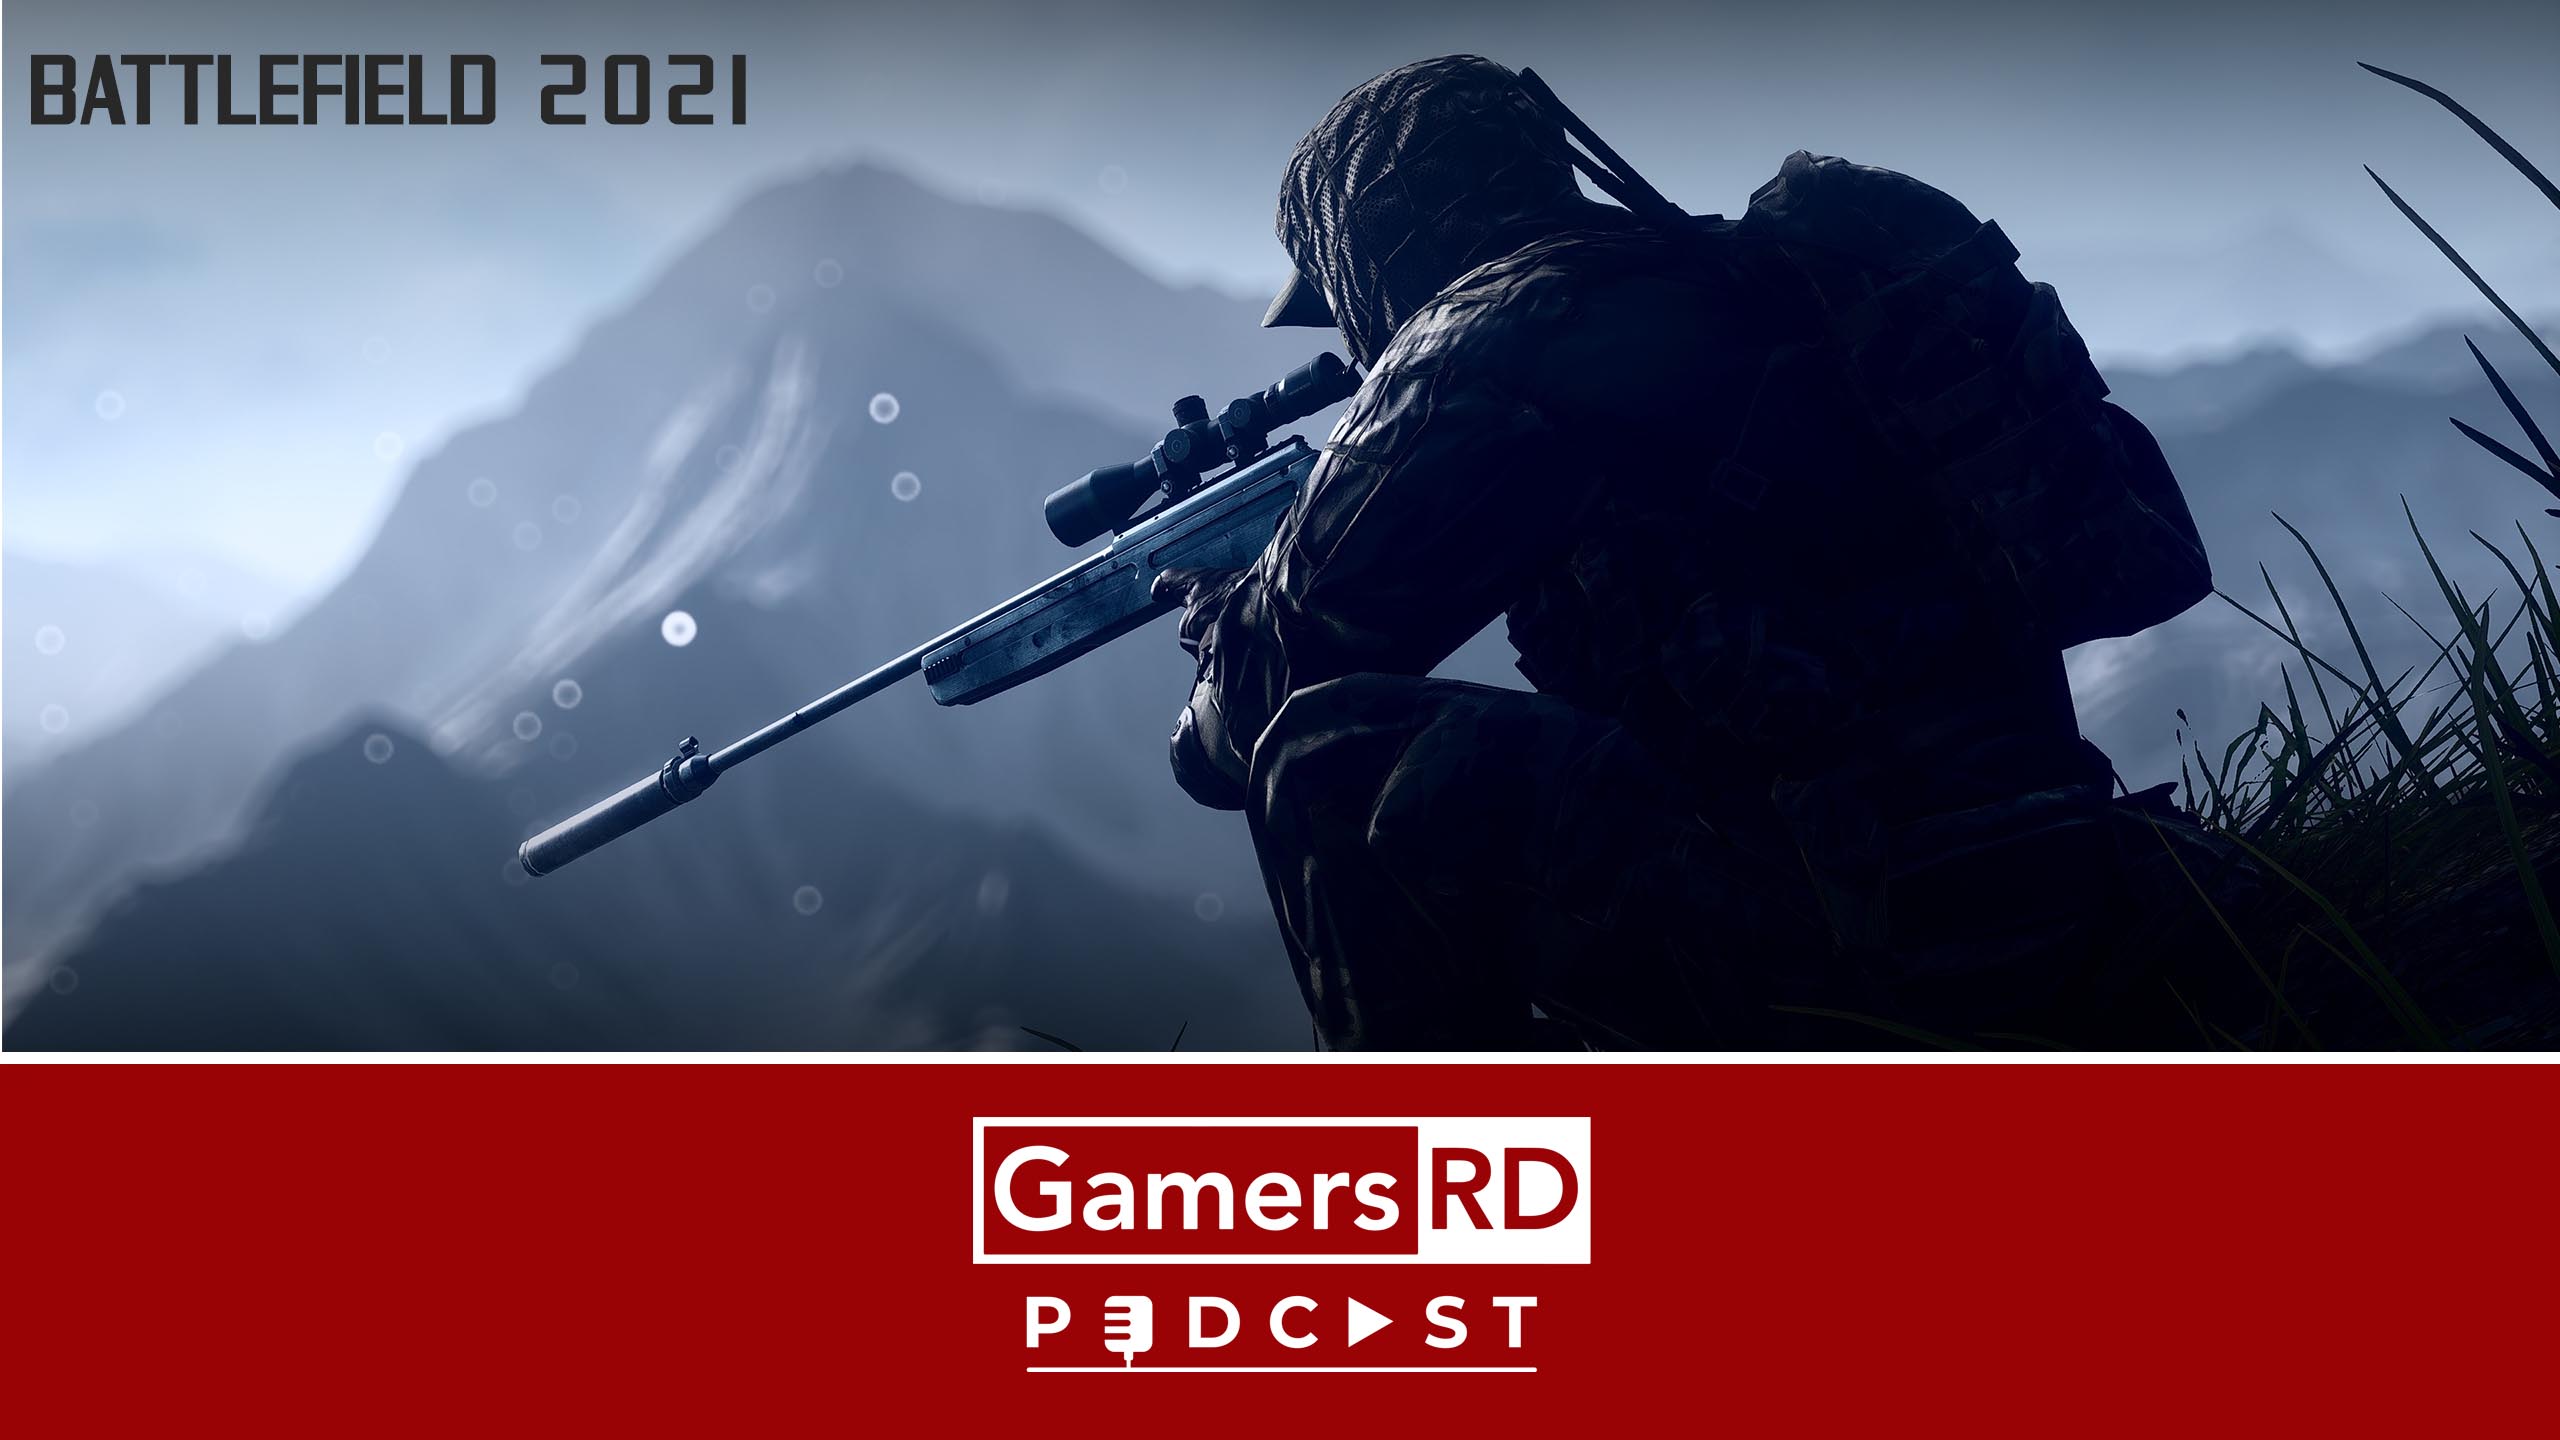 GamersRD Podcast , Battlefield 2021, EA, DICE